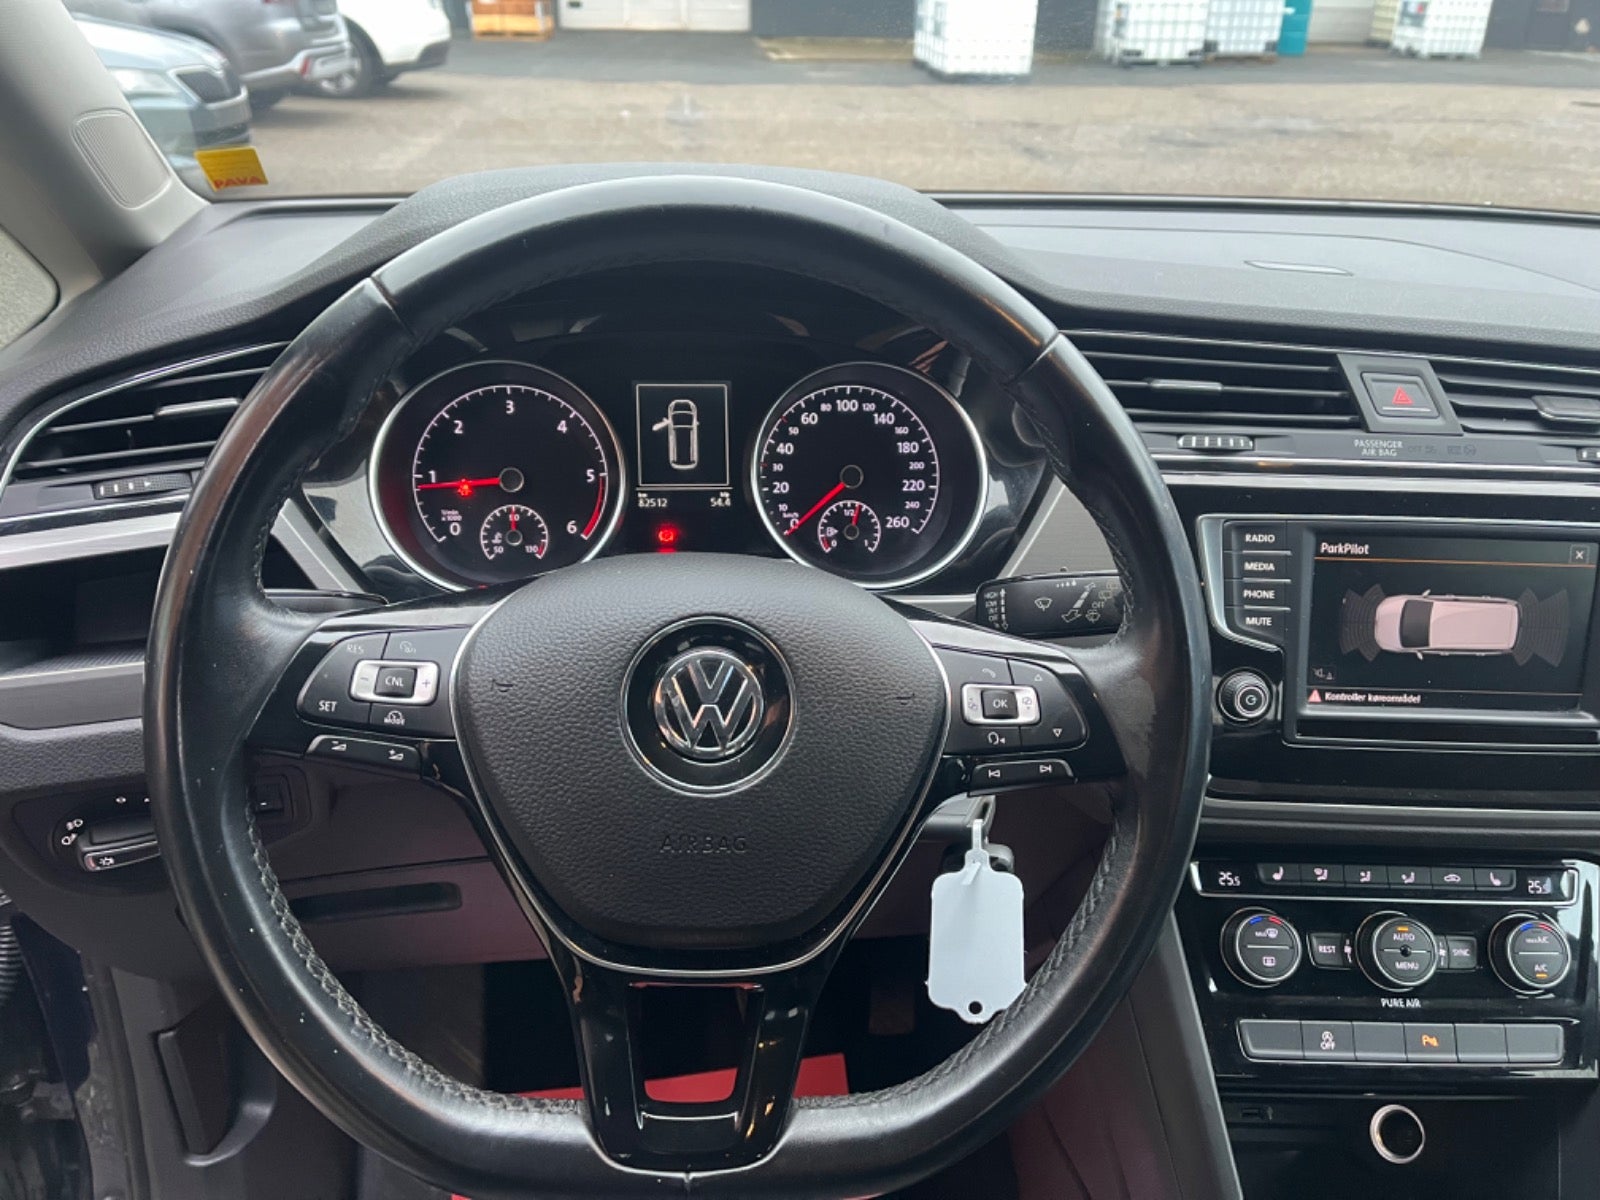 VW Touran 2016